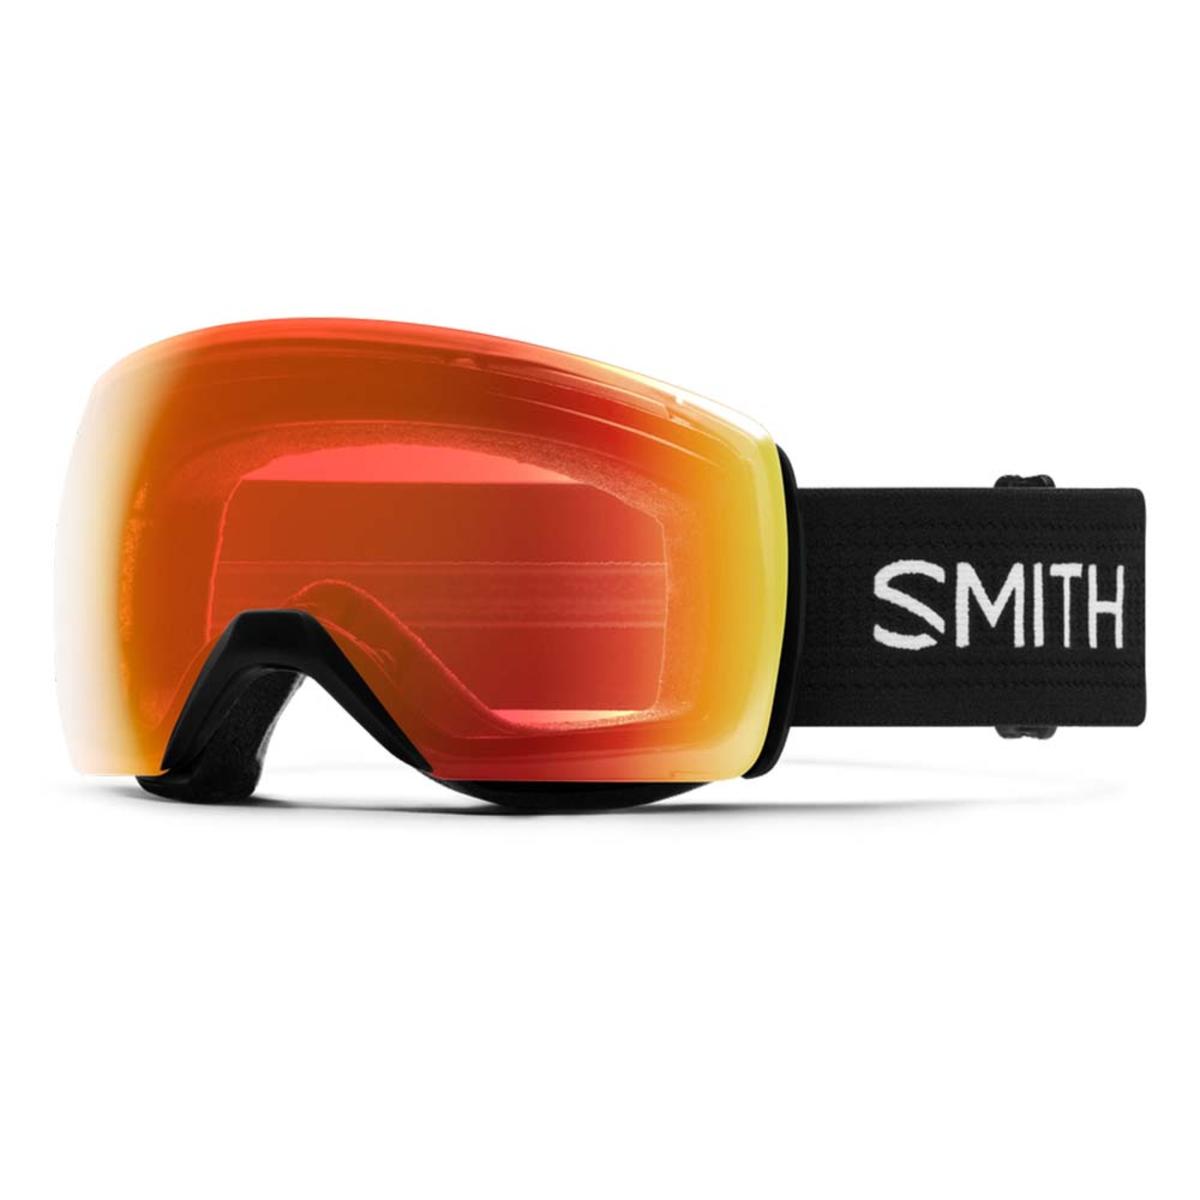 Smith Optics Skyline XL Goggles Chromapop Everyday Red Mirror - Black Frame